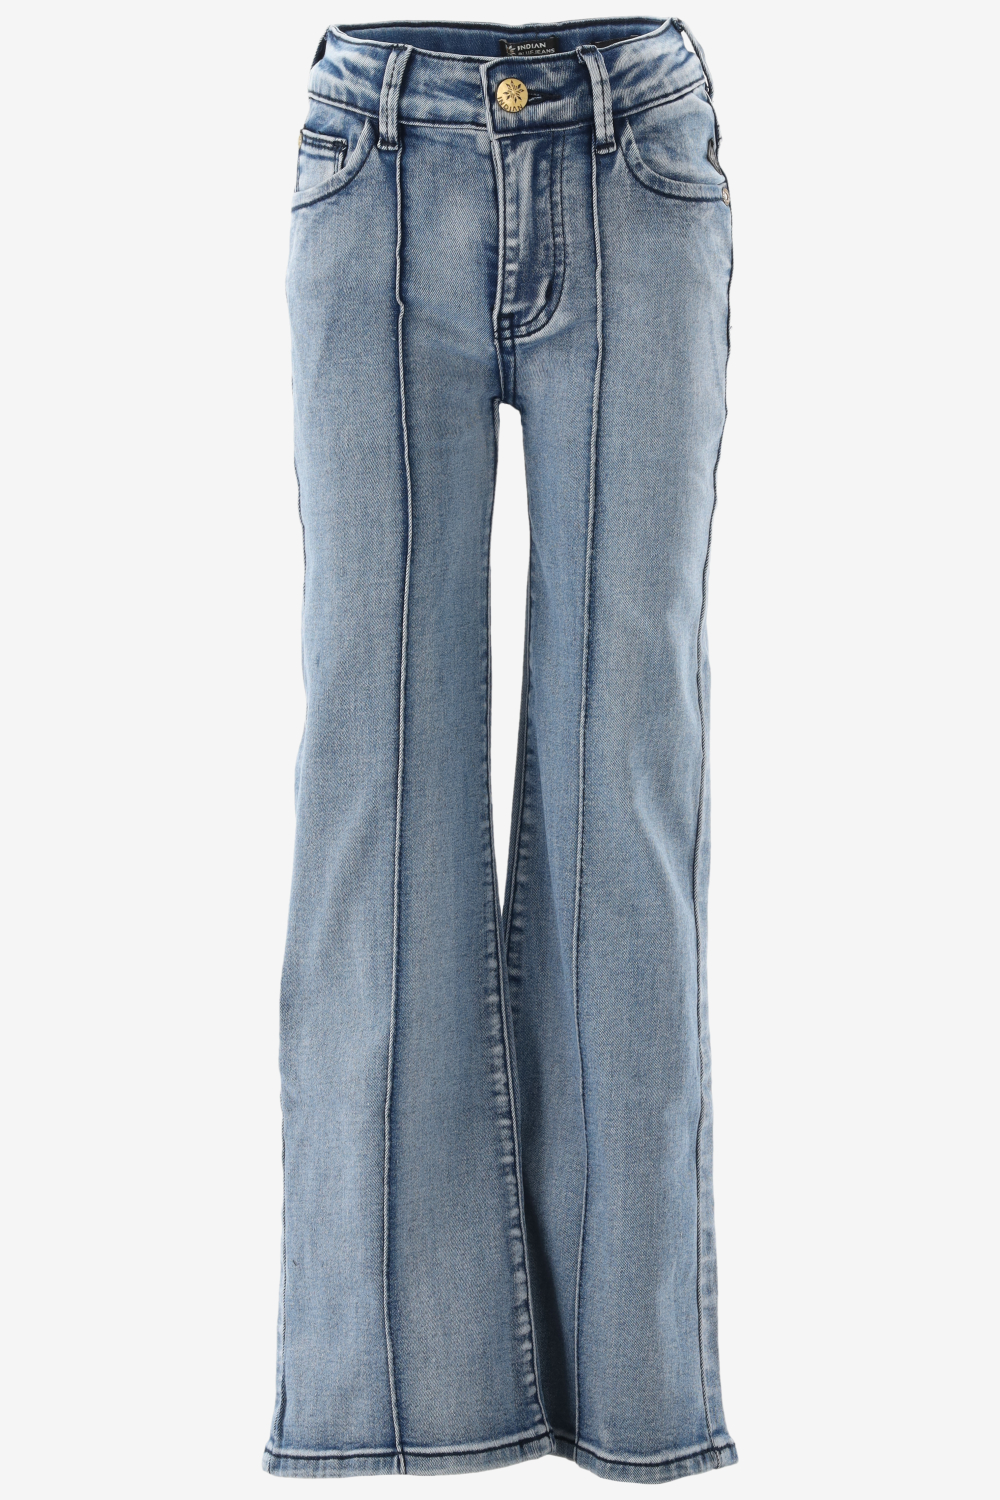 Indian Blue Jeans Lange broek meisje dark denim maat 176